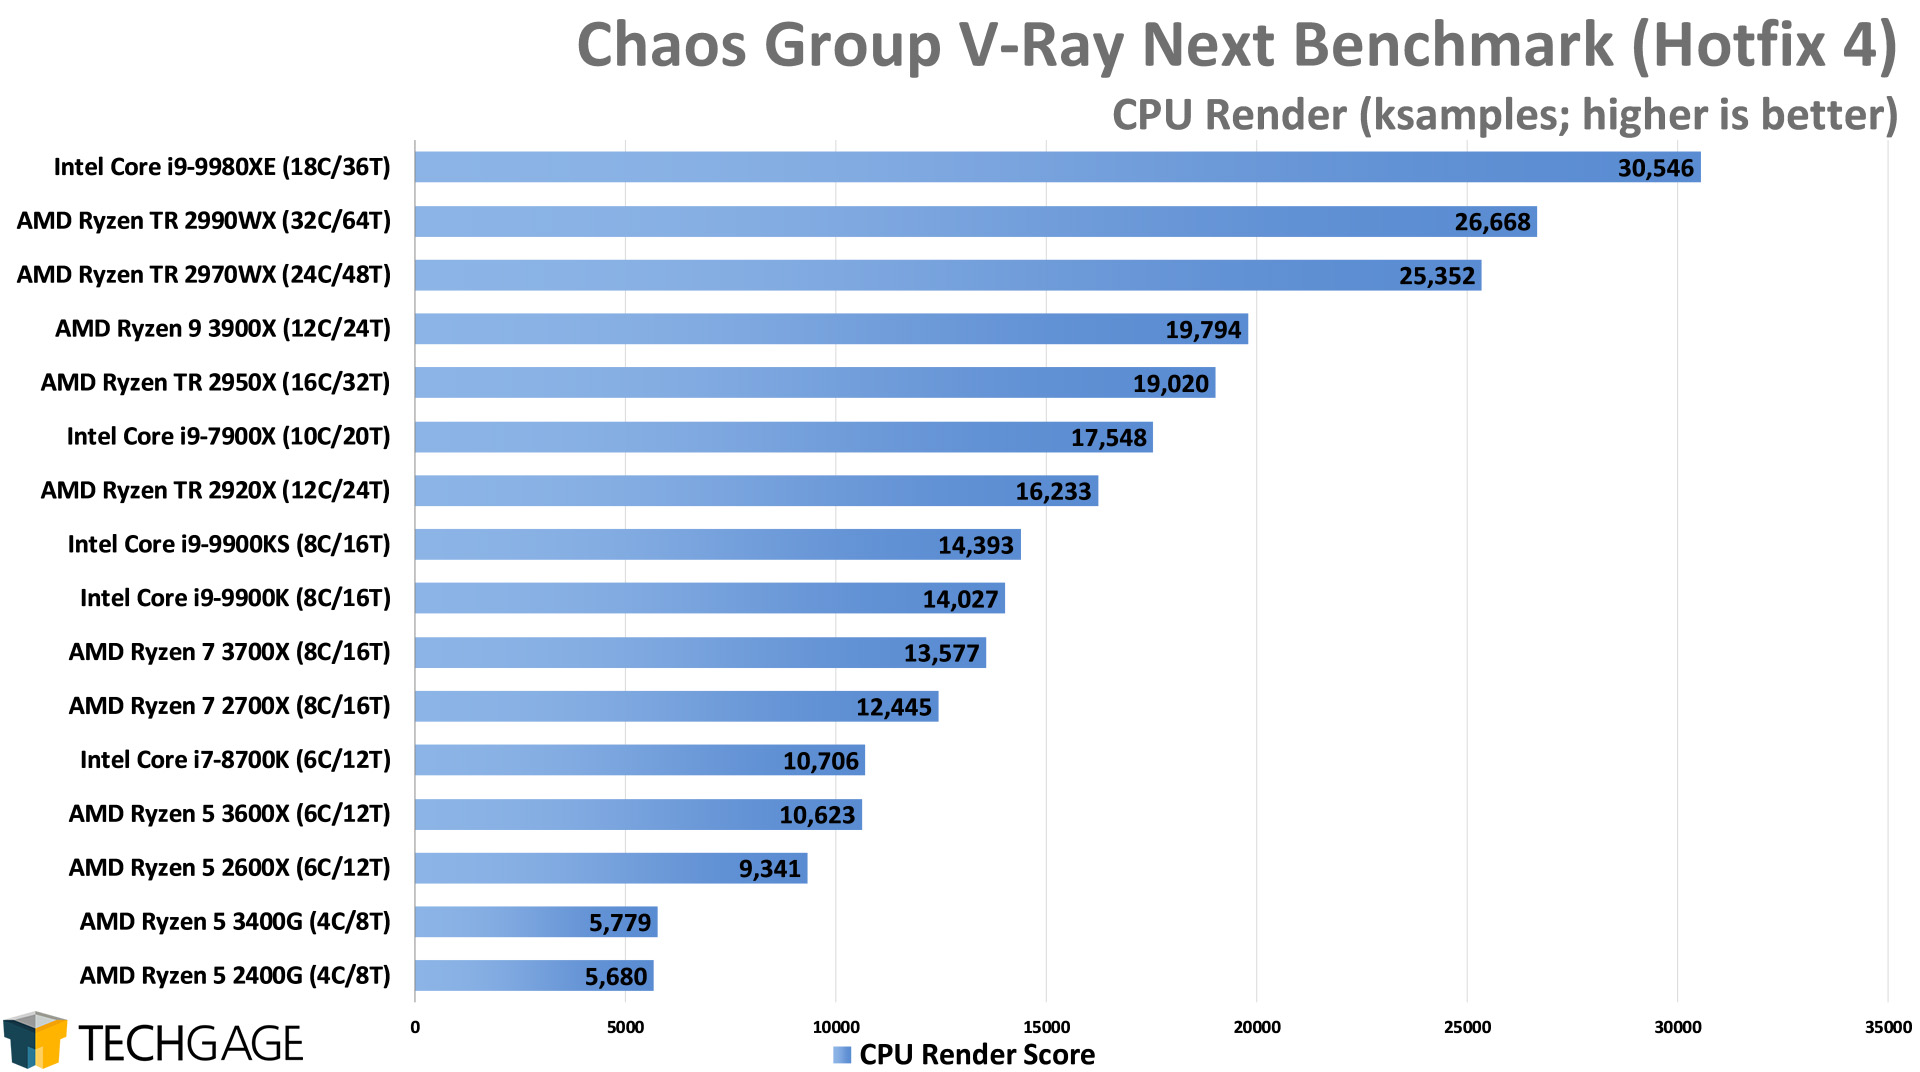 Chaos Group V-Ray Next Benchmark - CPU Render Score (Intel Core i9-9900KS)